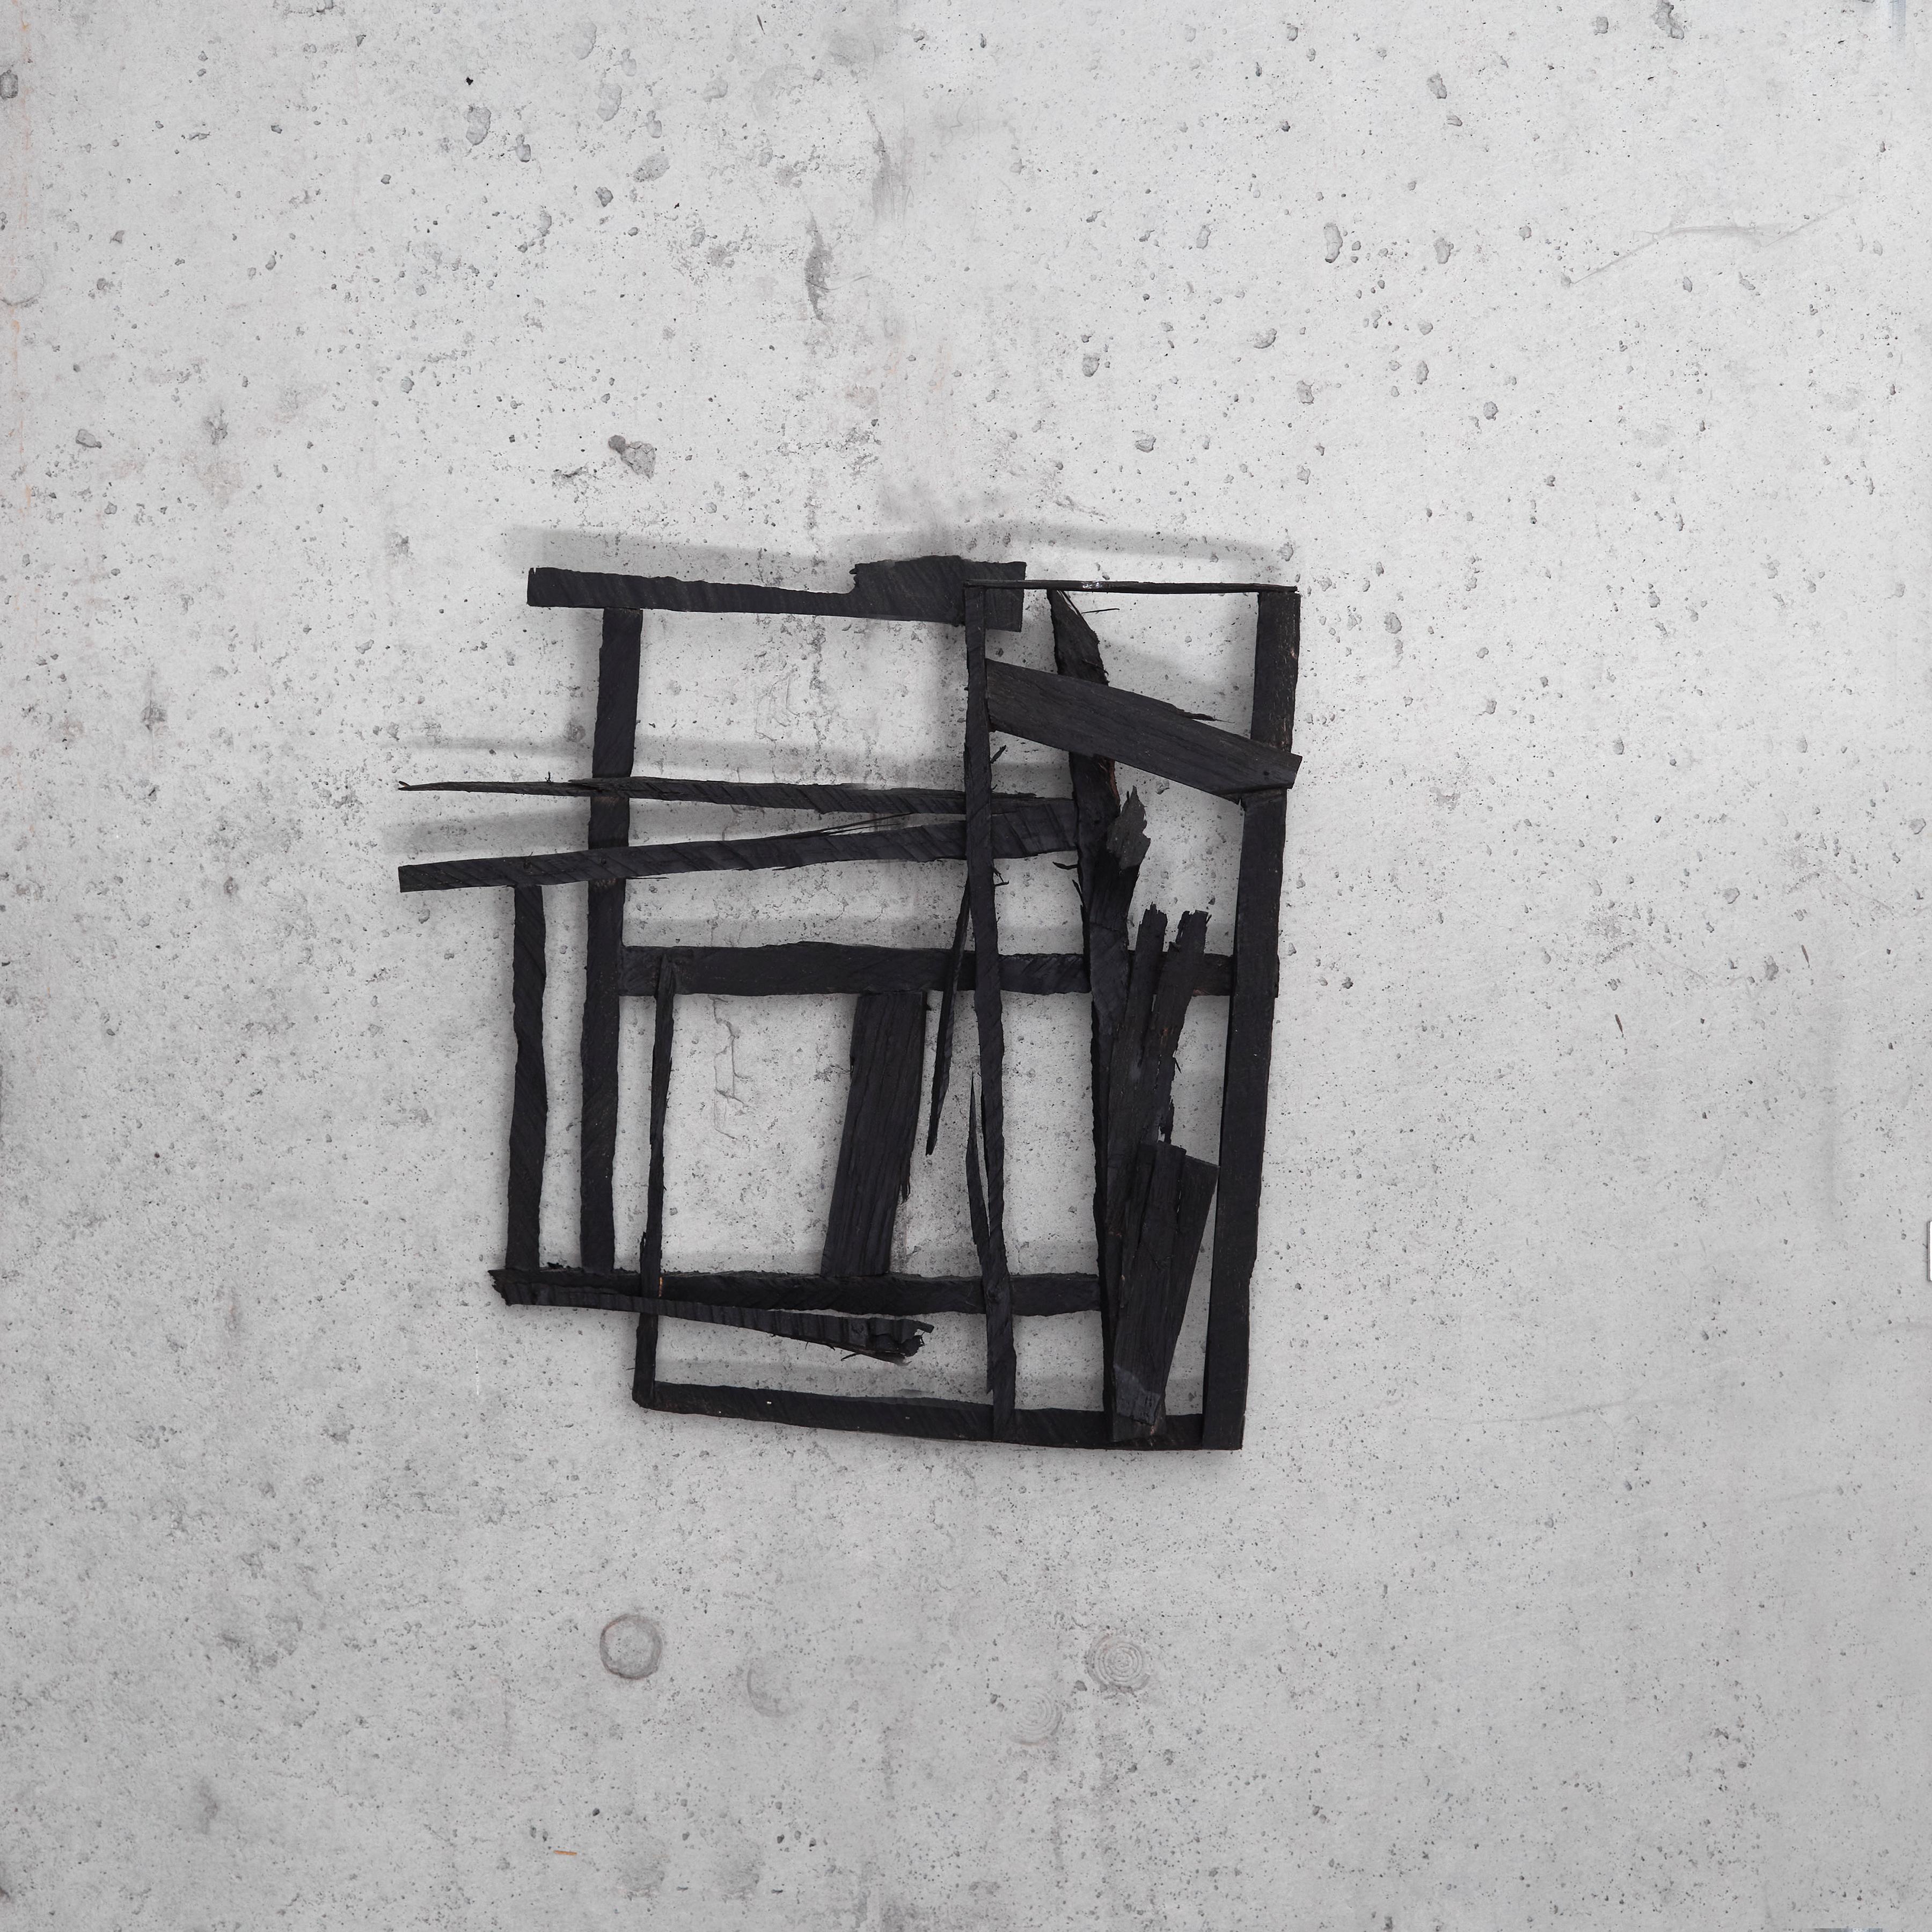 Joe Sultan Abstract Sculpture - Norwegian Wood, black abstract geometric wooden sculpture